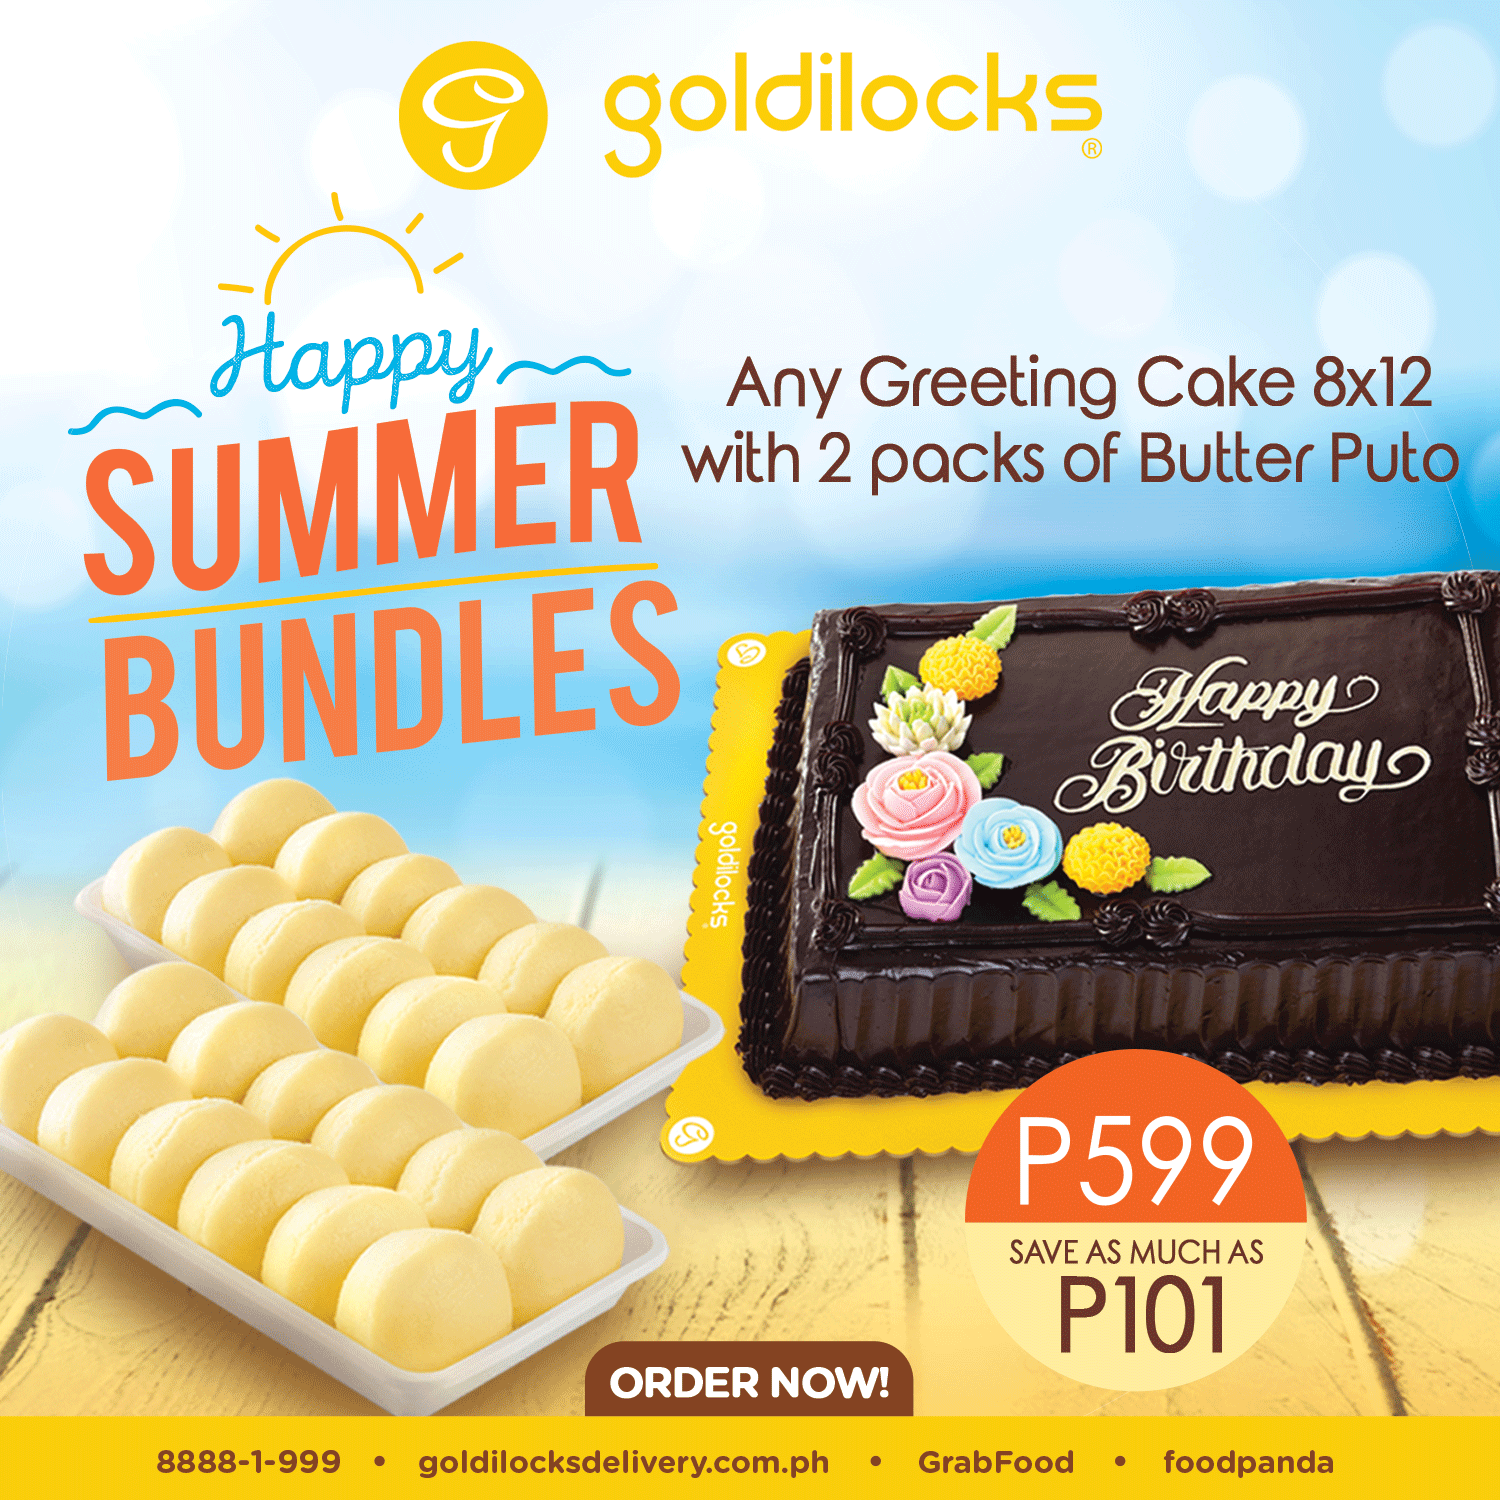 Goldilocks Happy Summer Bundles Promo until April 30, 2021